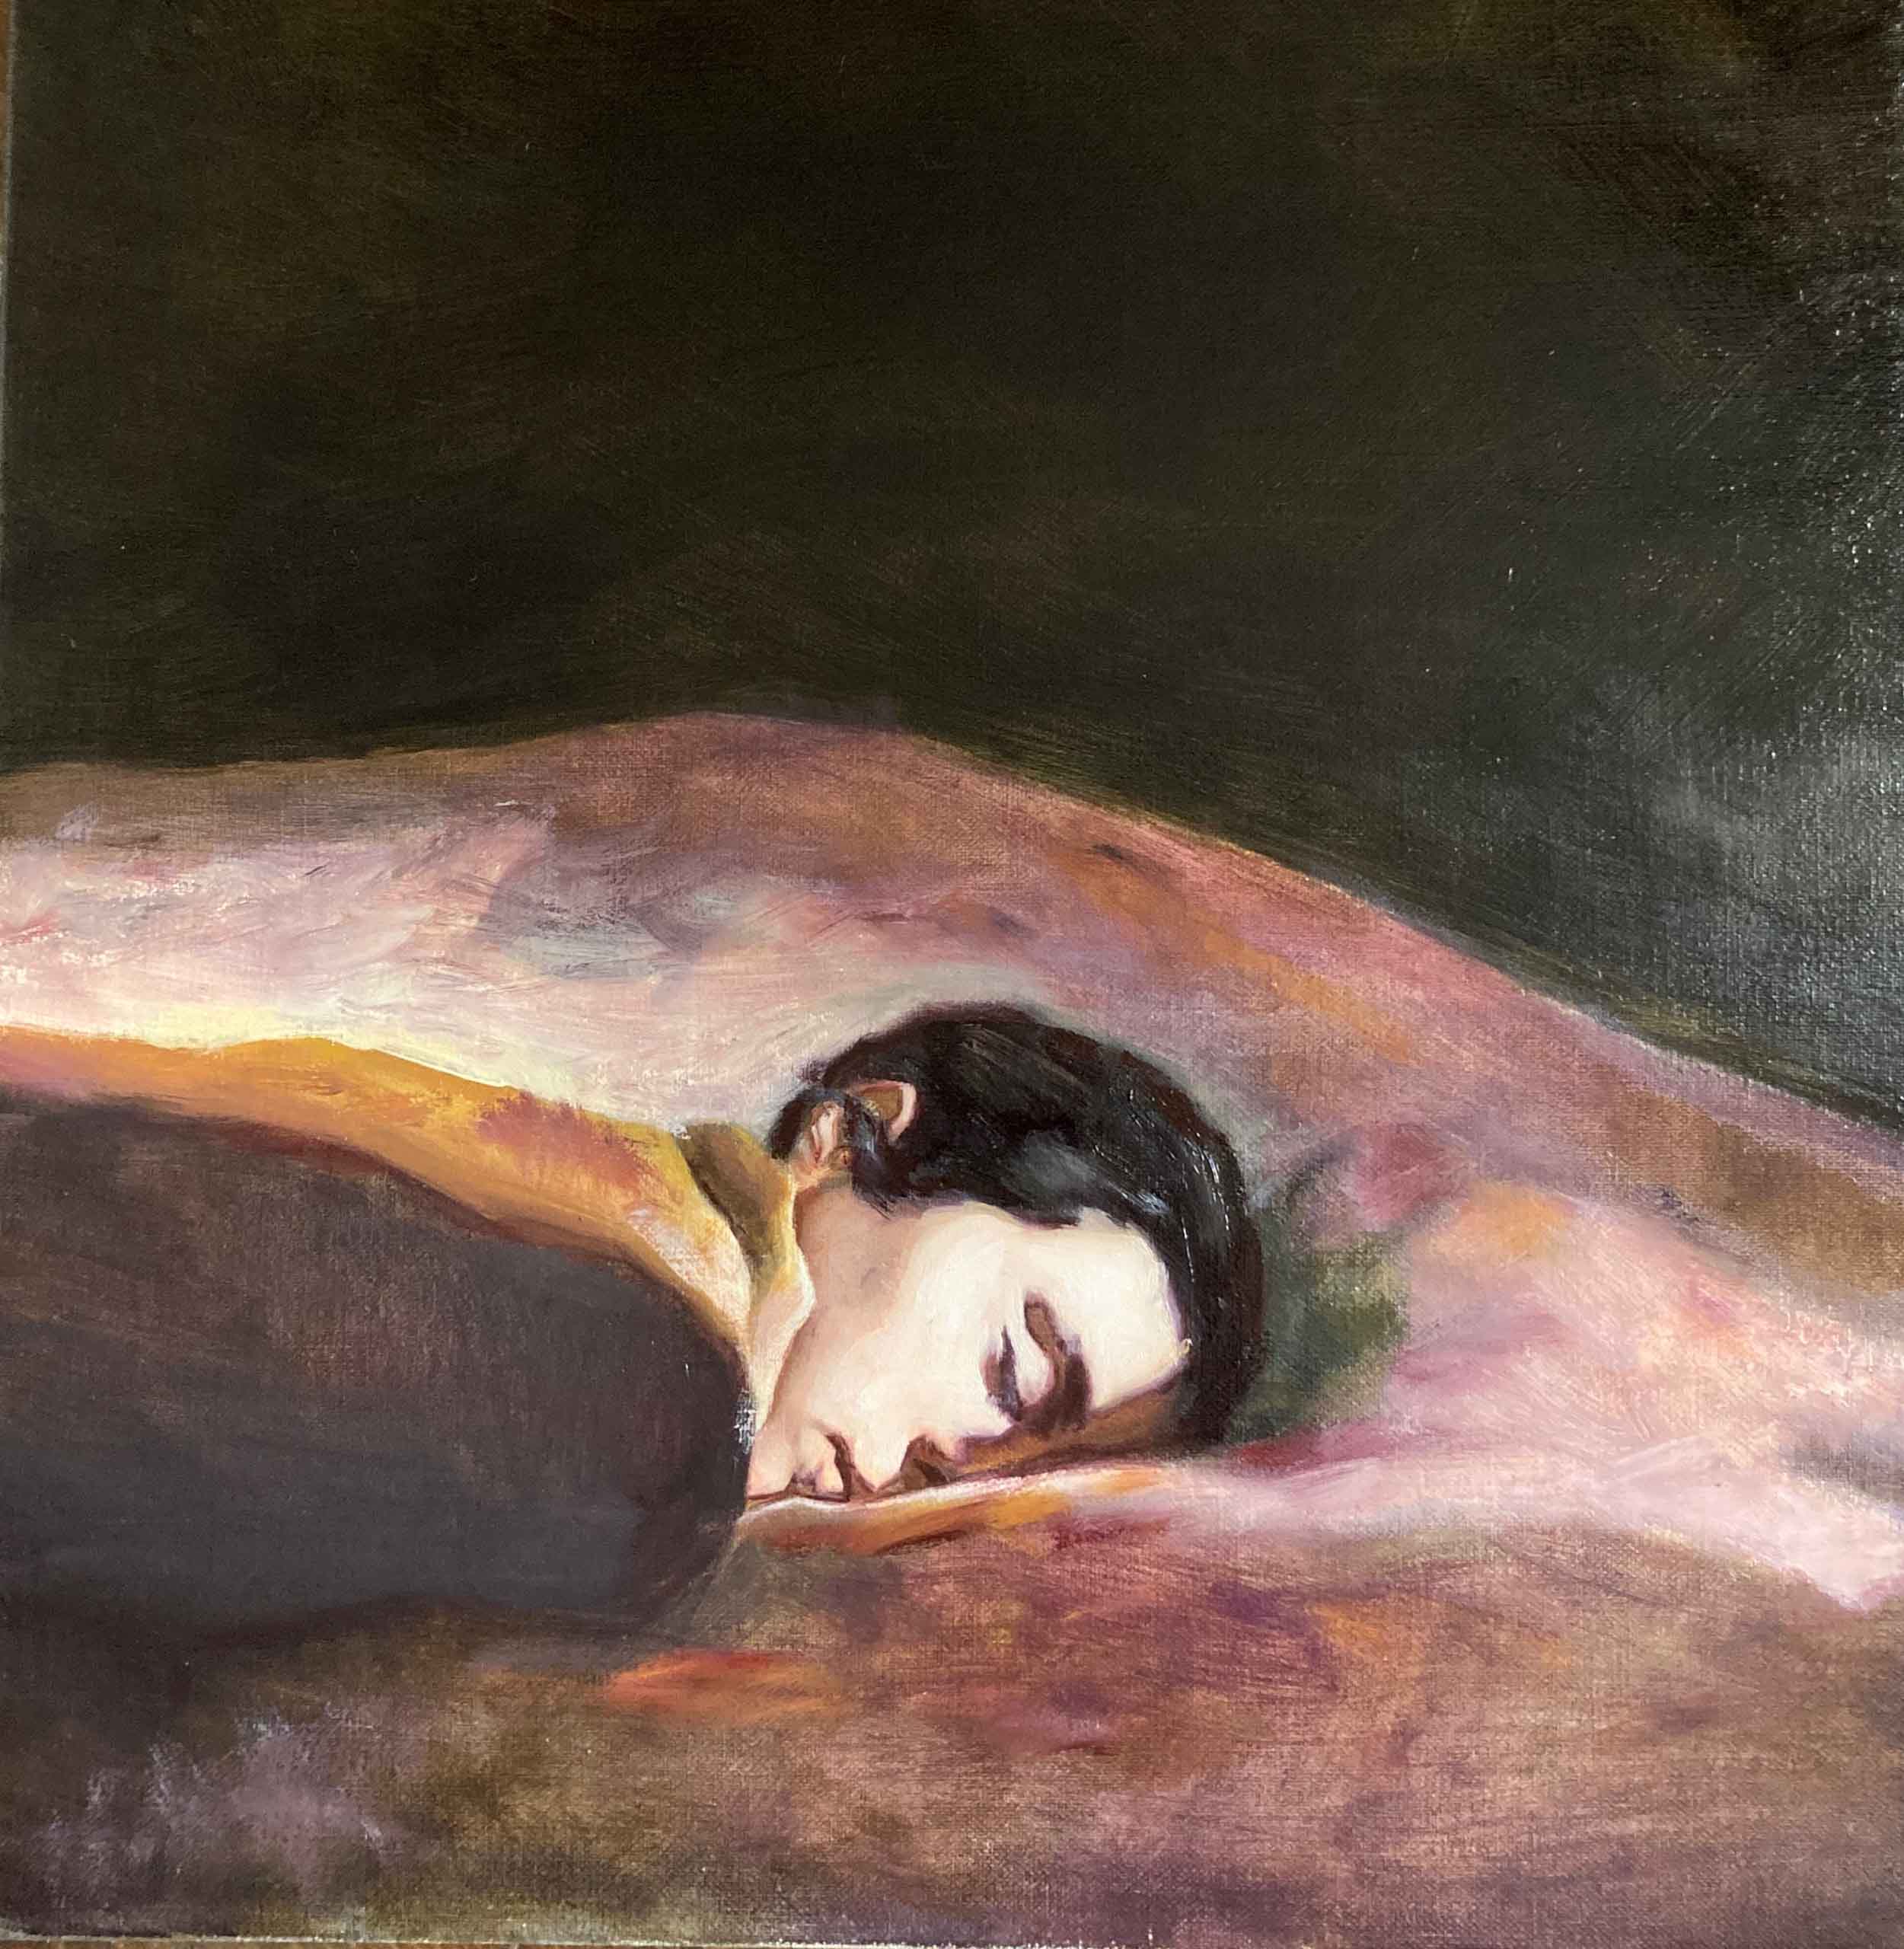 Halldór Kristjánsson, "The Dream", Oil on canvas, 40 x 50 cm, 2020